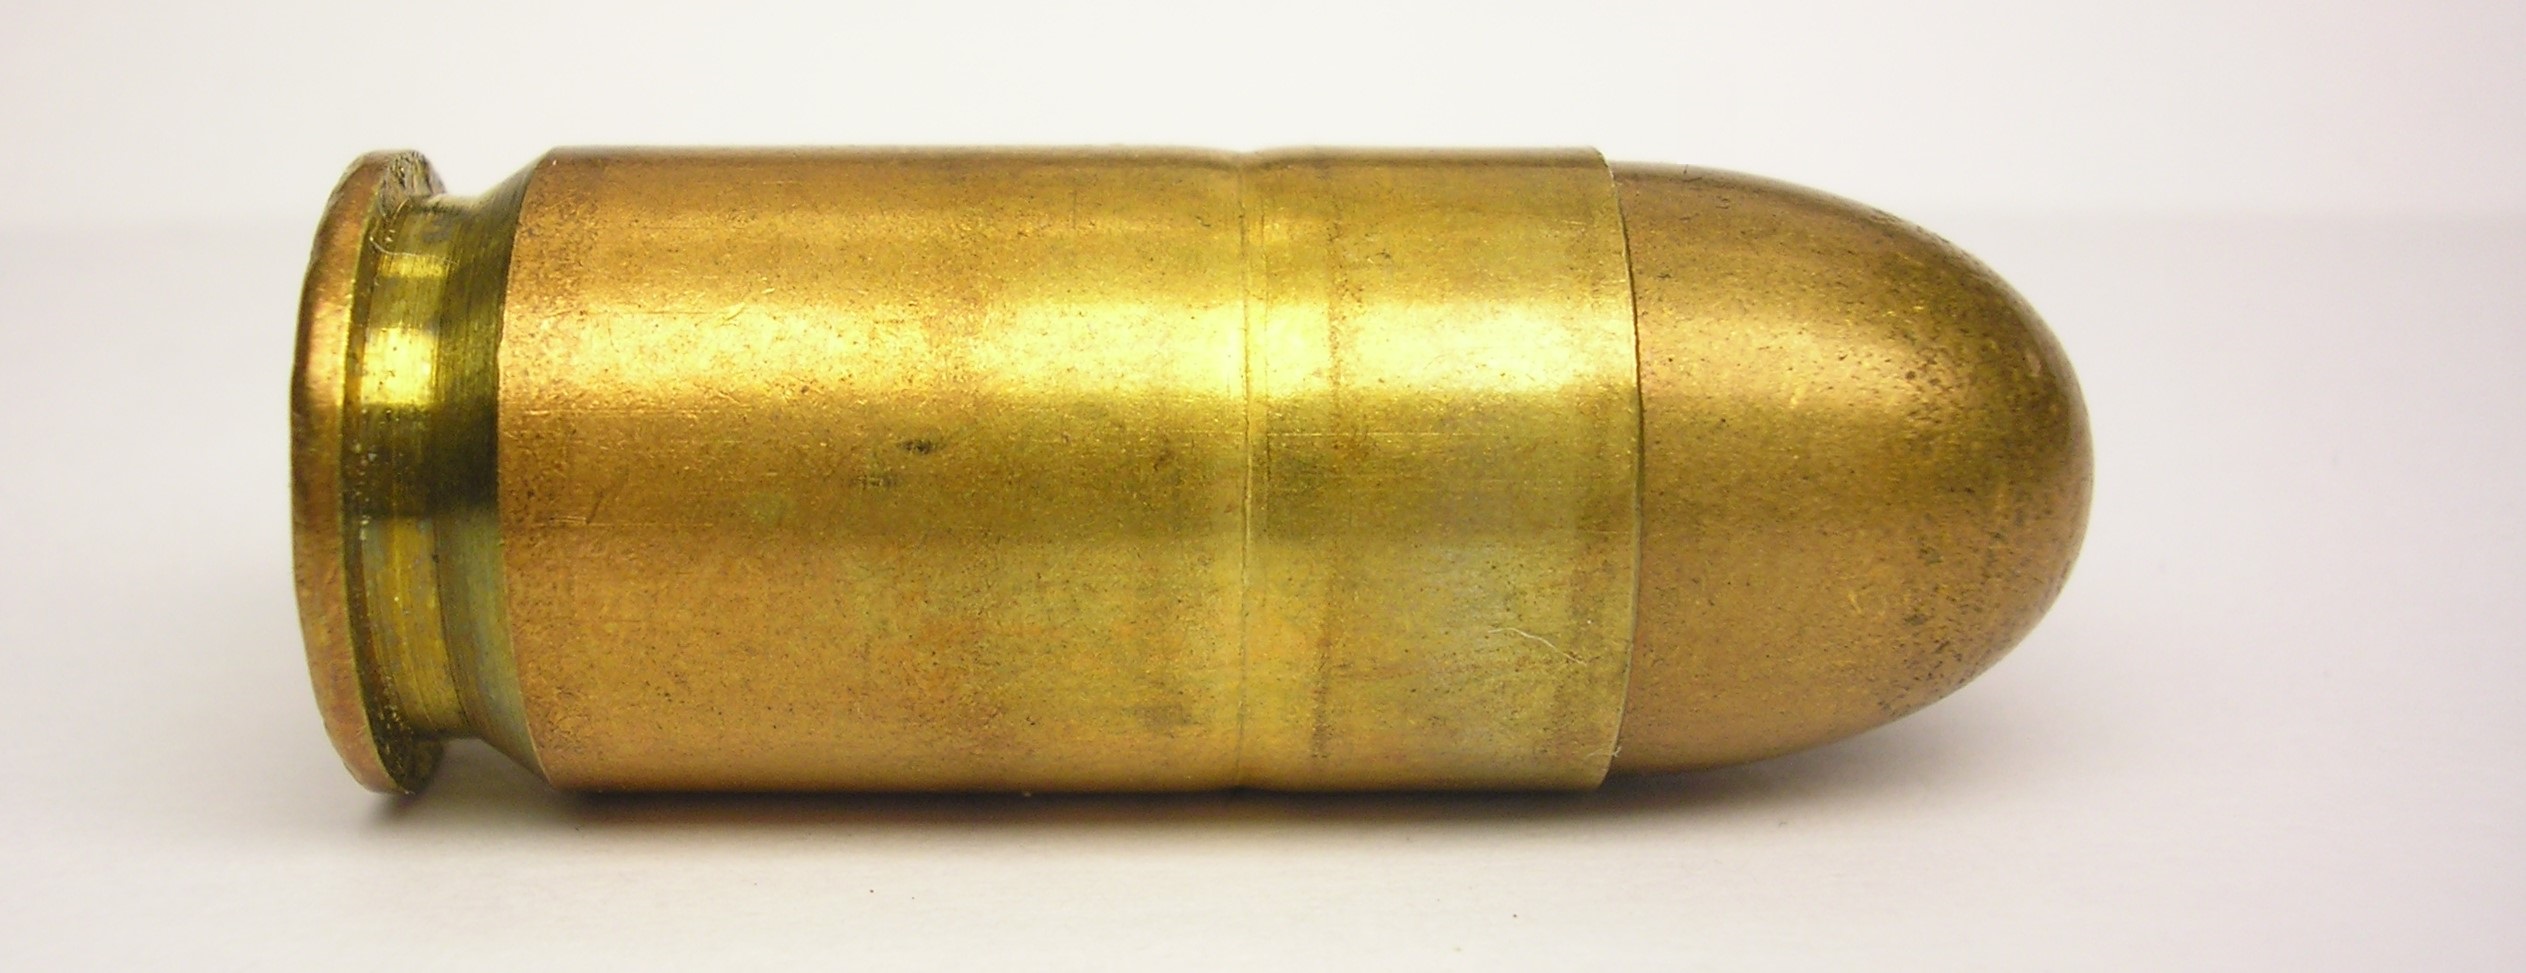 ./ammo/1125/patroner/Patron-1125-RA-Helmantel-1952-side-1.JPG